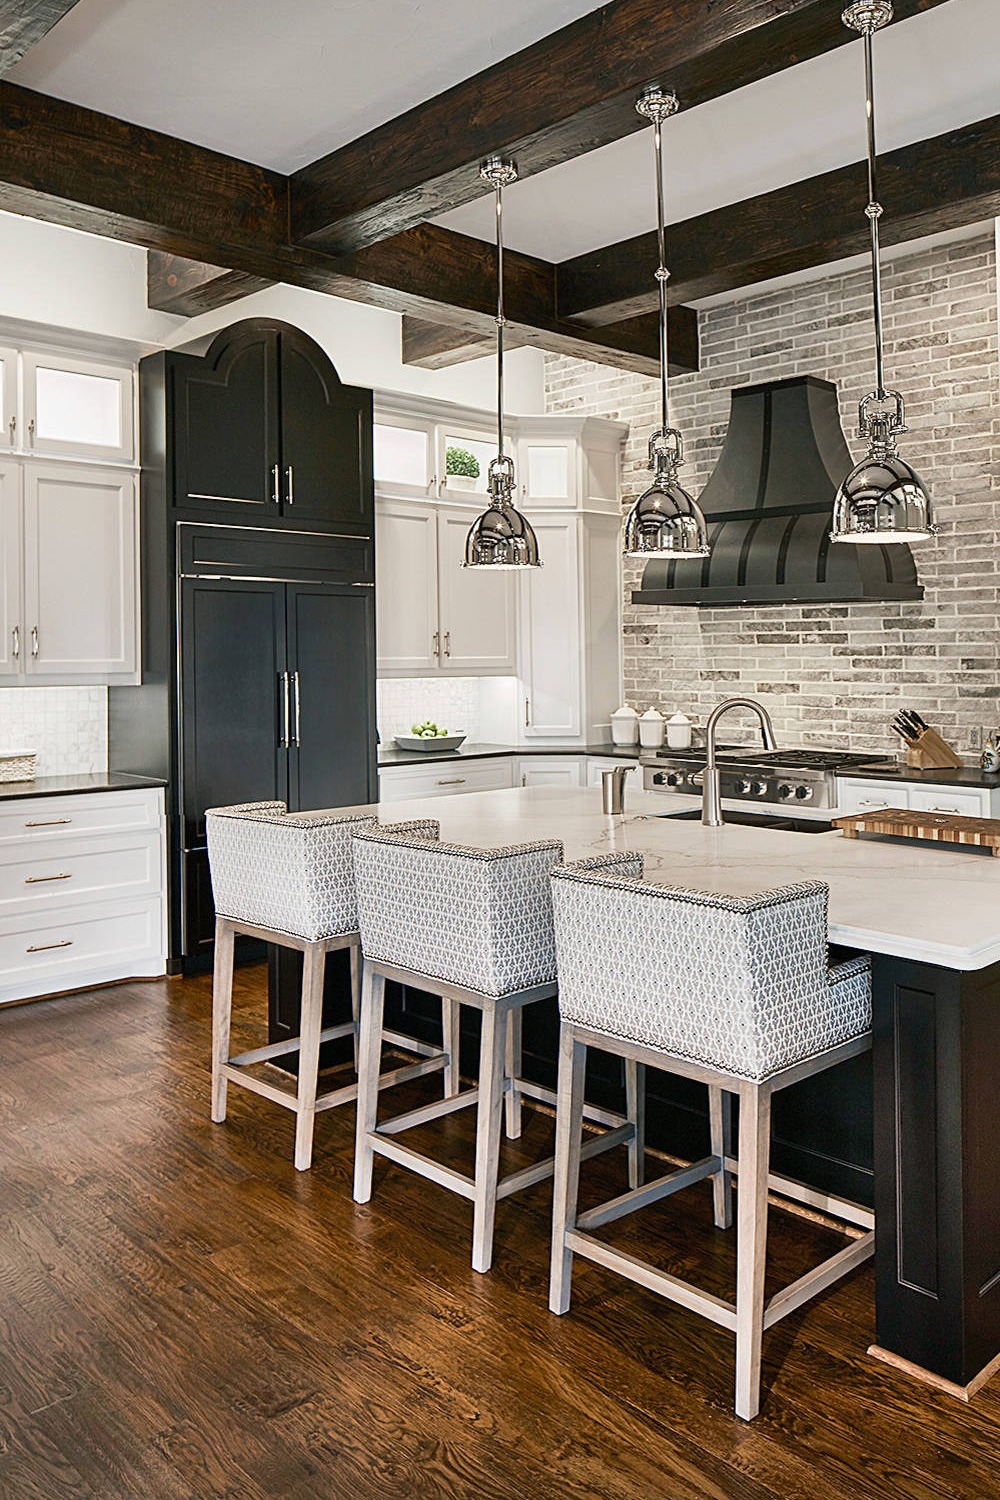 White Kitchen Cabinets Quartz Countertops Brick Backsplash Tiles Dark Island Hardwood Floor